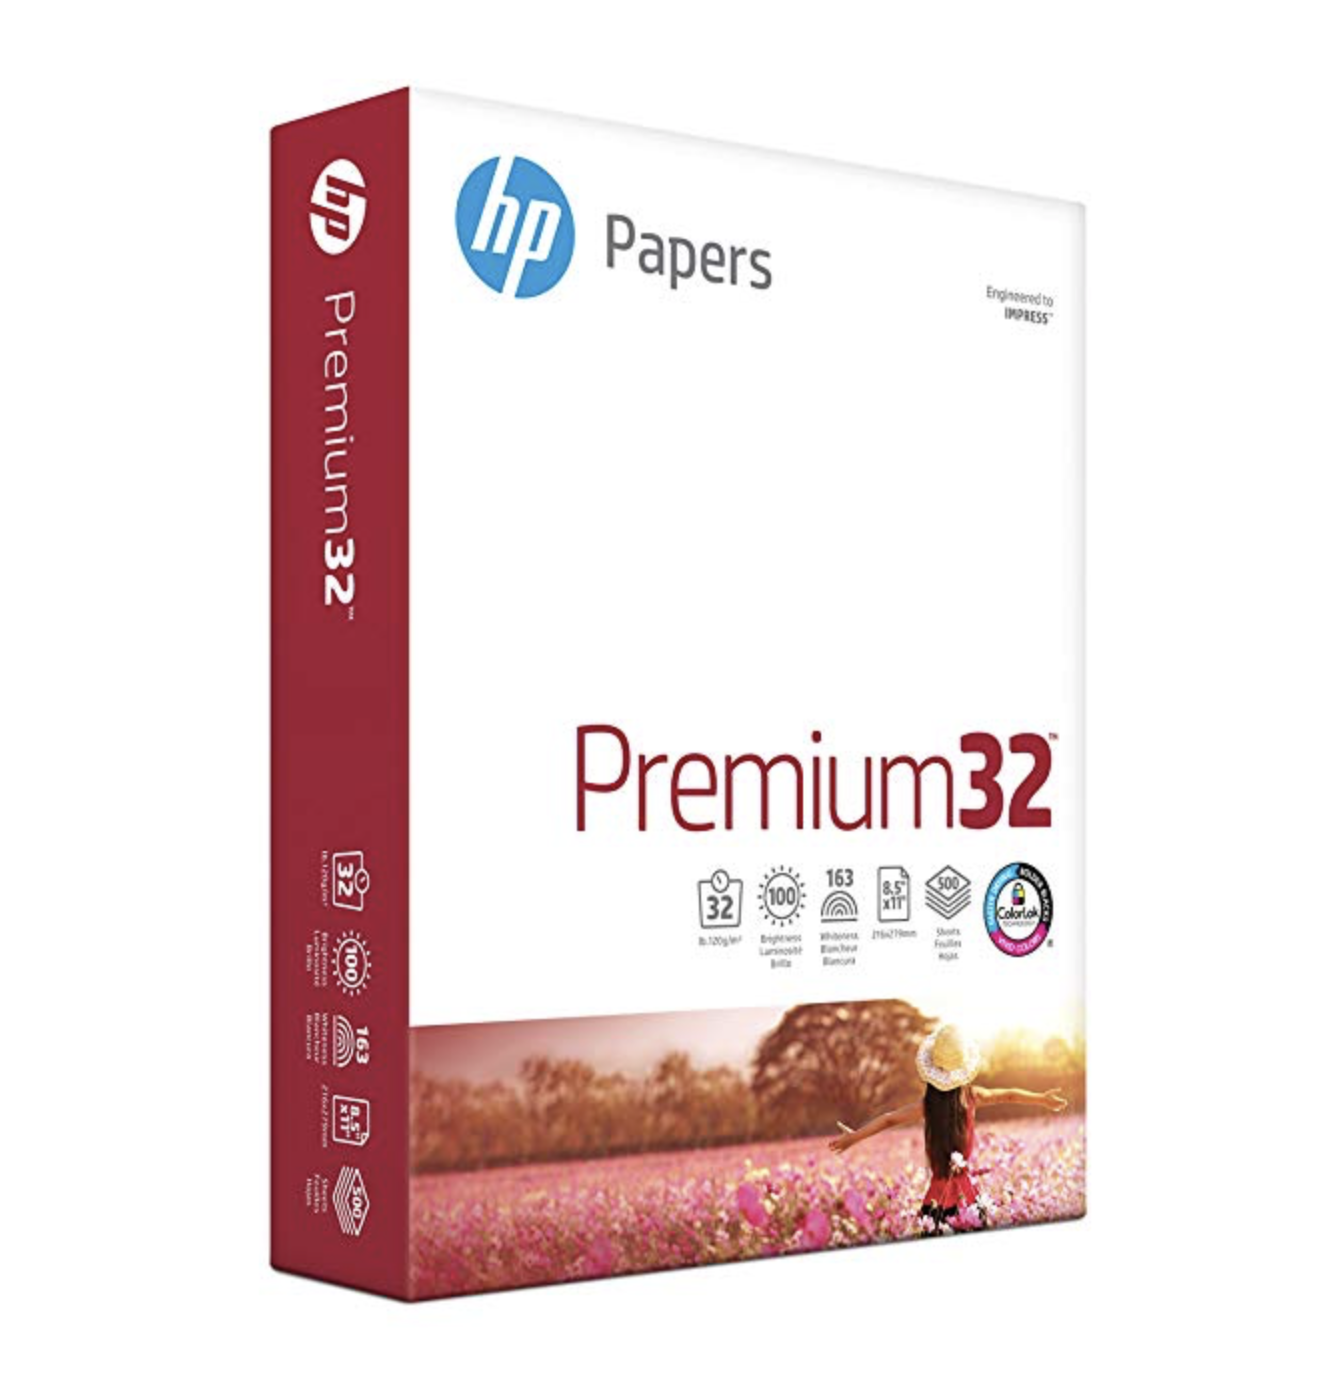 HP Printer Paper, Premium32, 32lb Paper, 100 Bright